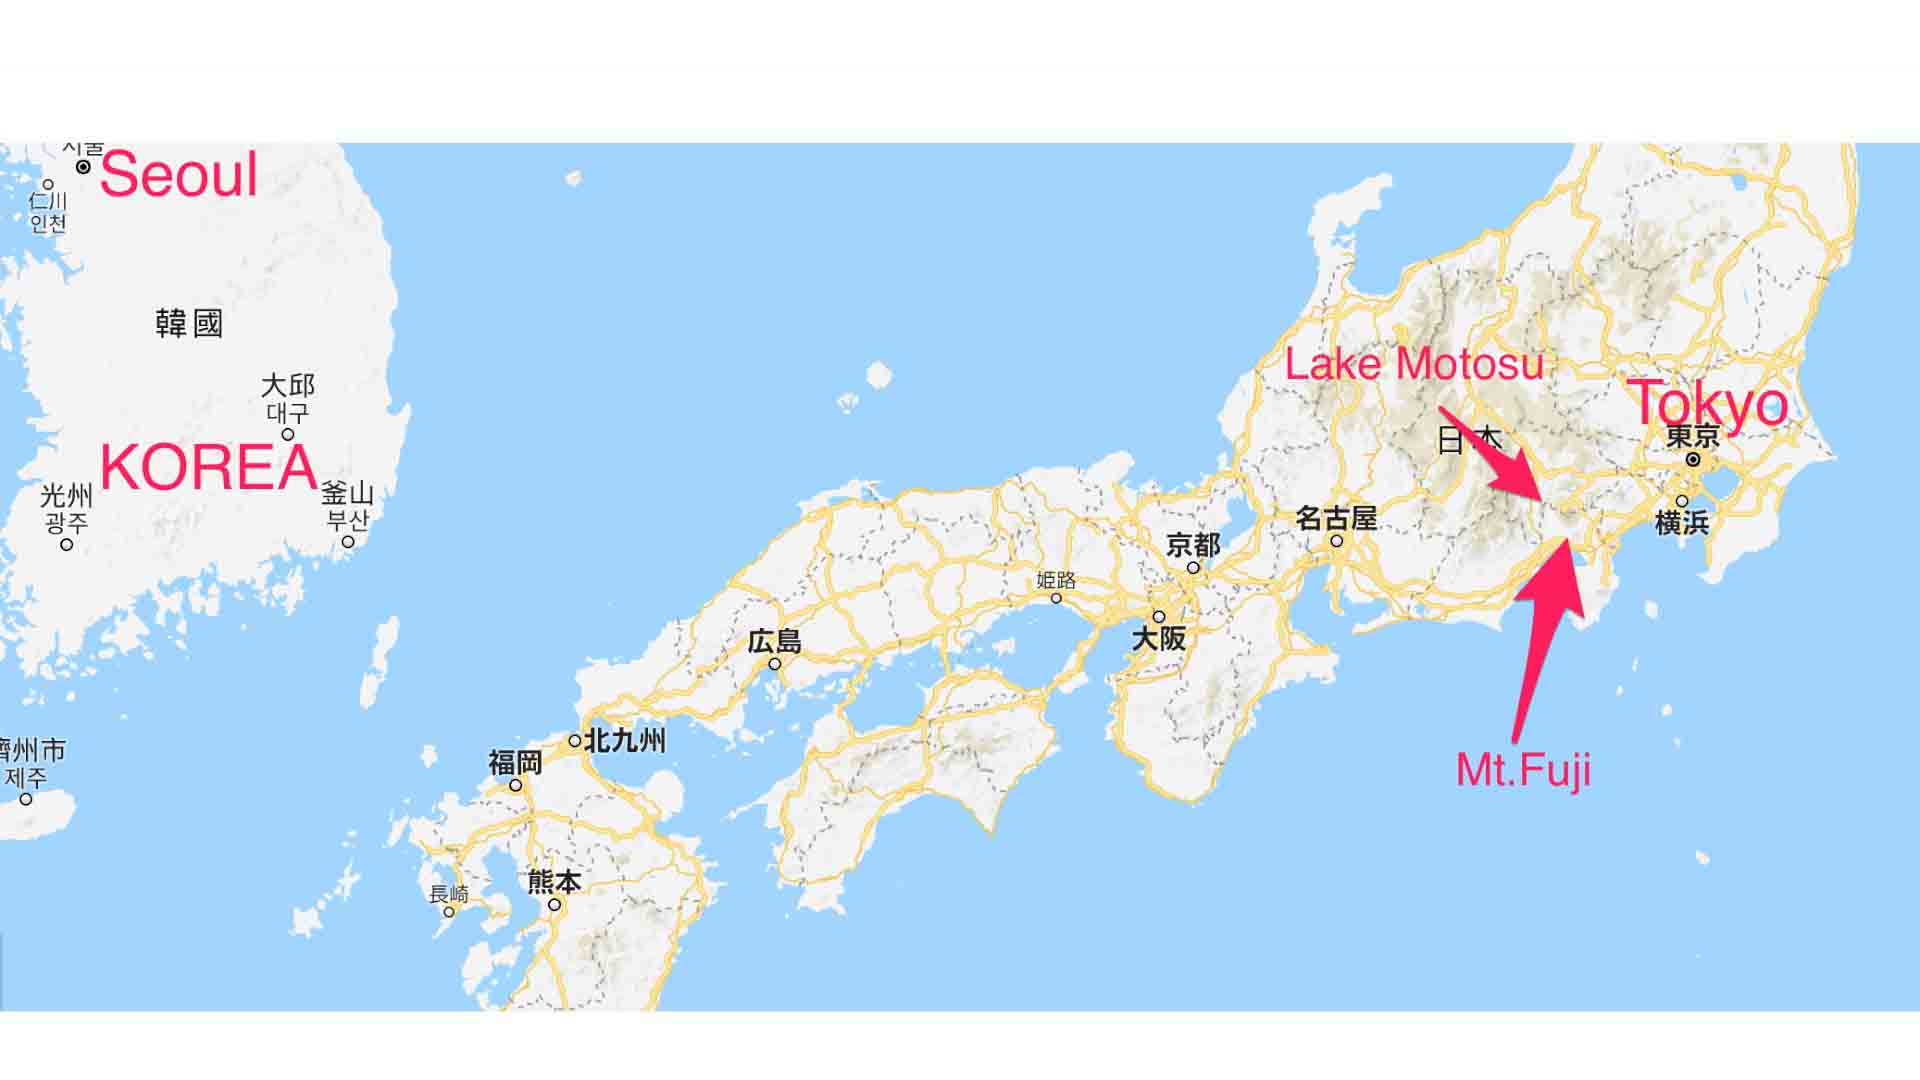 Lake Motosu Fuji Tokyo Japan Map Performer Cycles